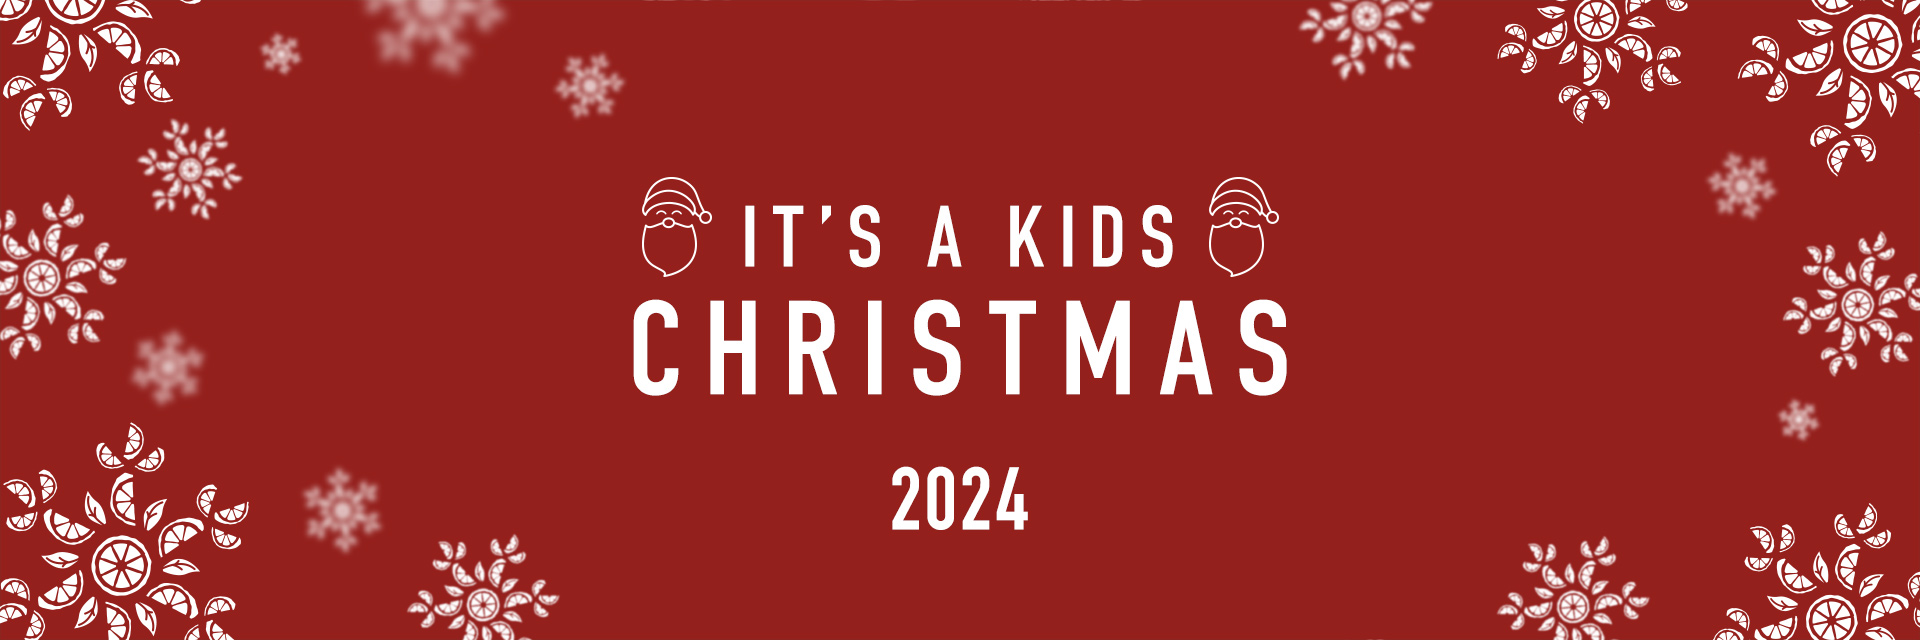 Kids Christmas Menu 2024 at Ryhope Harvester